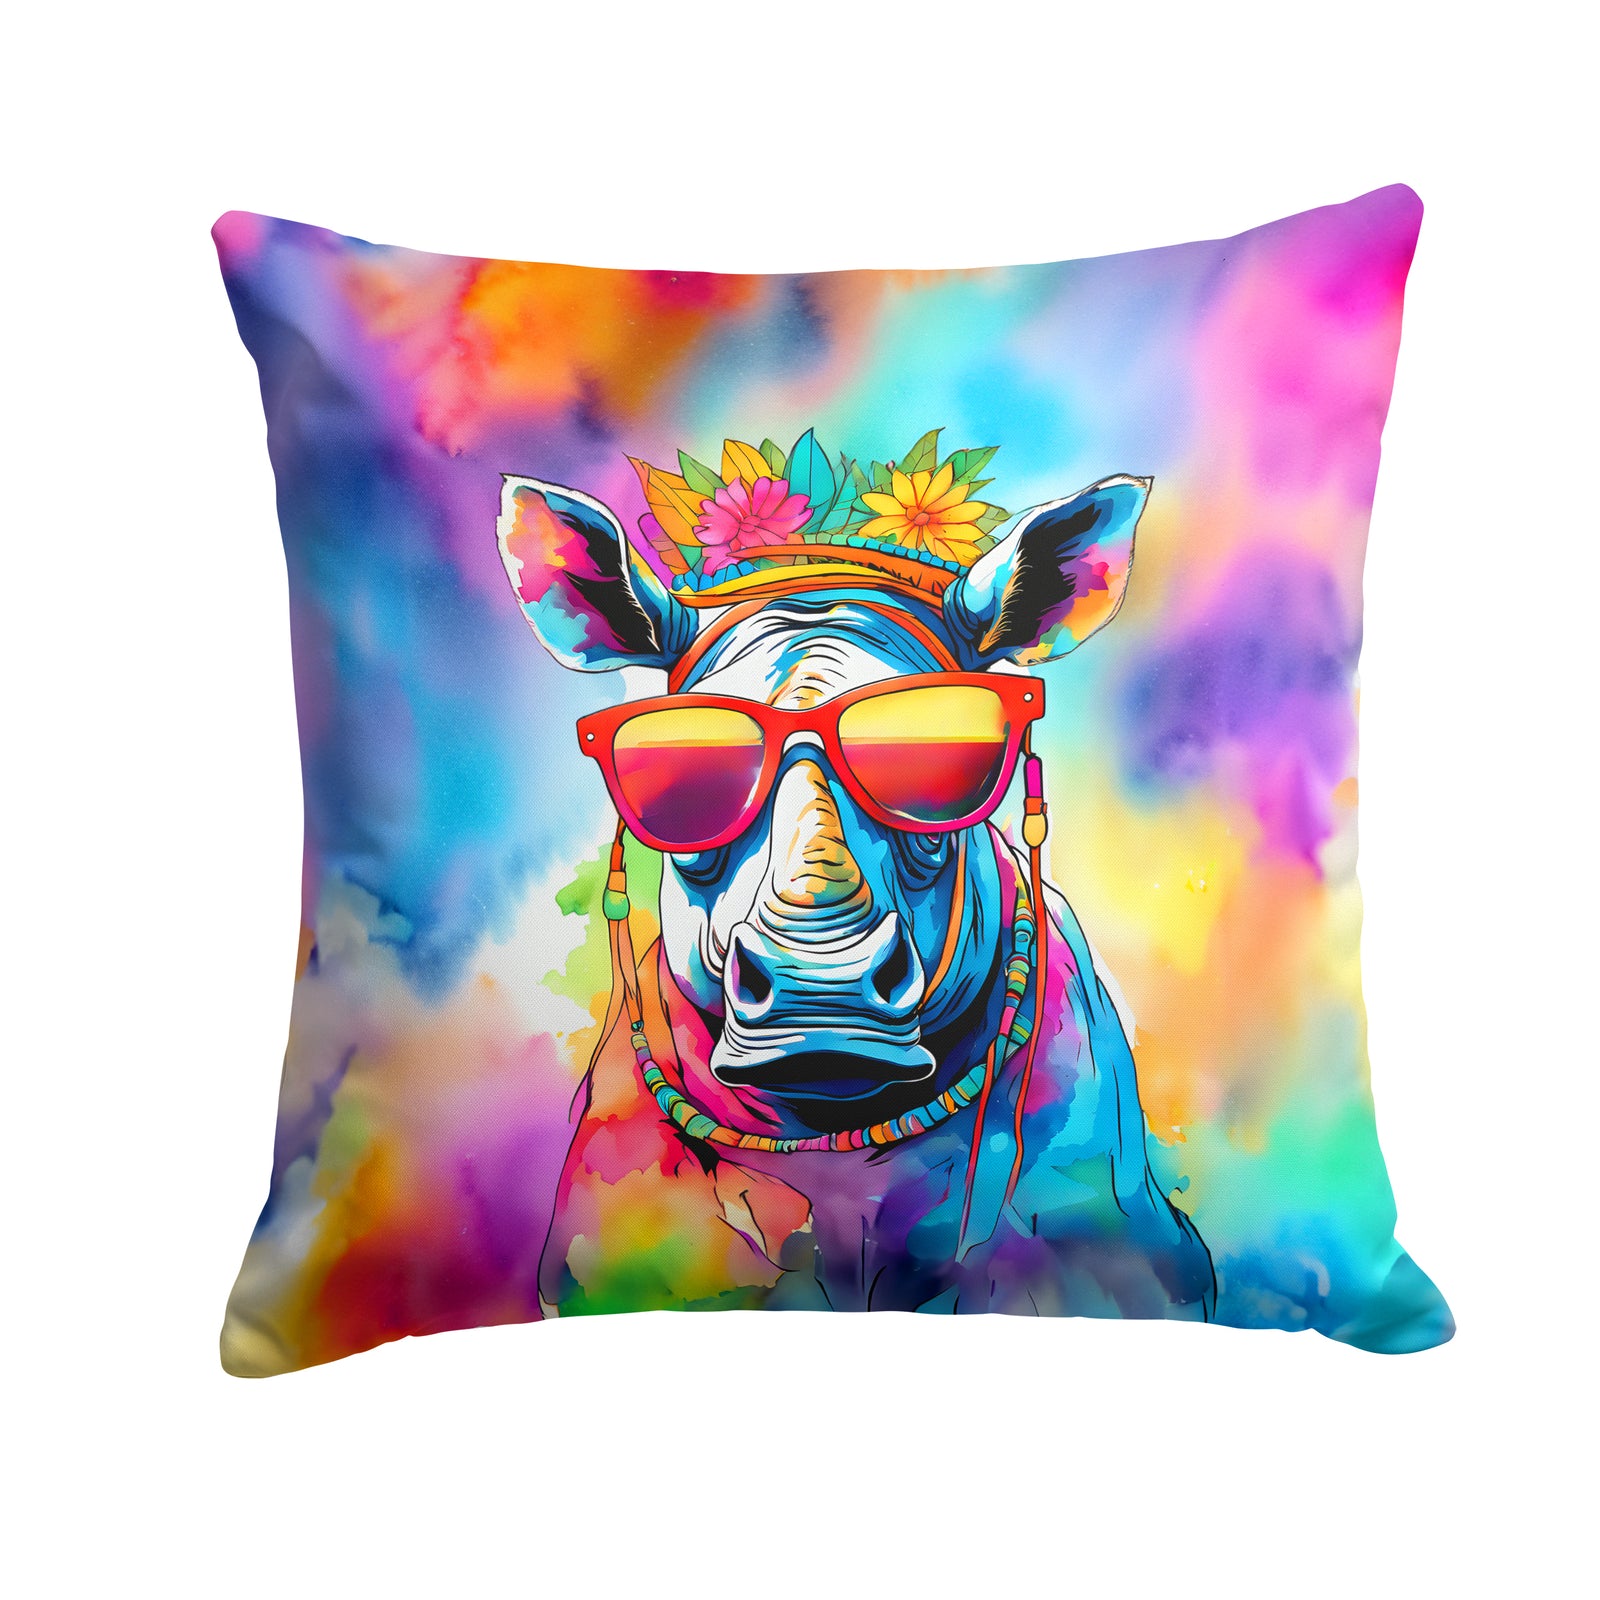 Buy this Hippie Animal Rhinoceros Throw Pillow